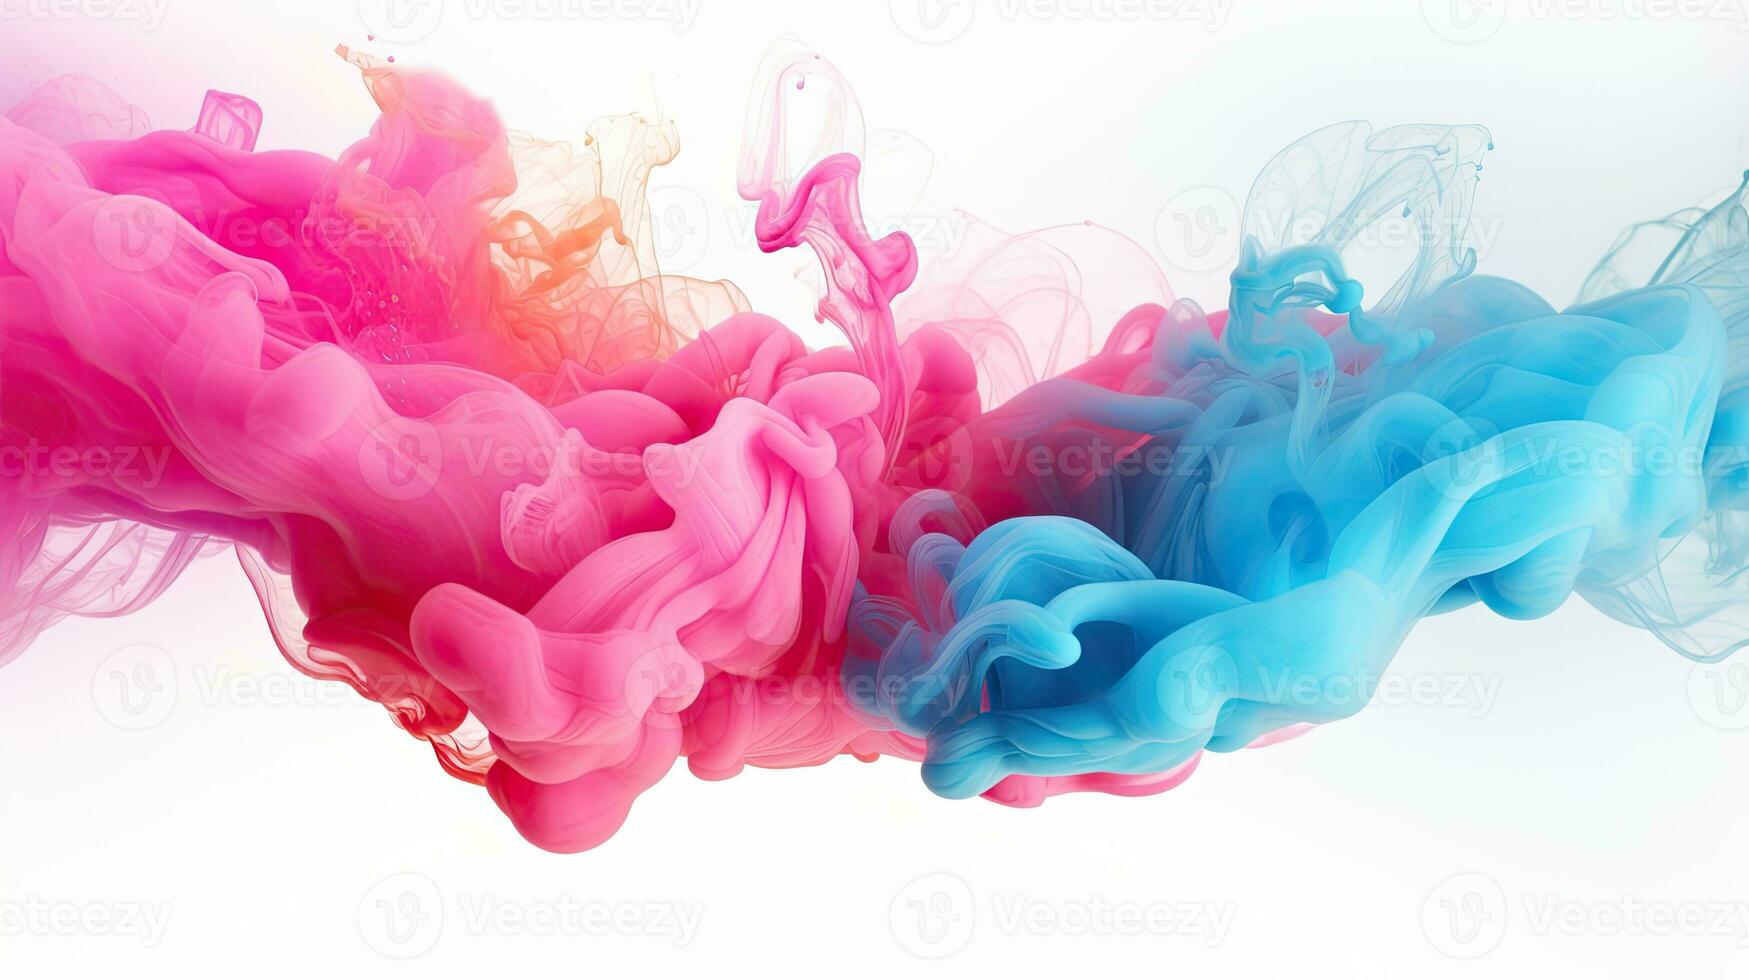 ai gegenereerd levendig abstract rook golven in pastel kleur harmonie foto